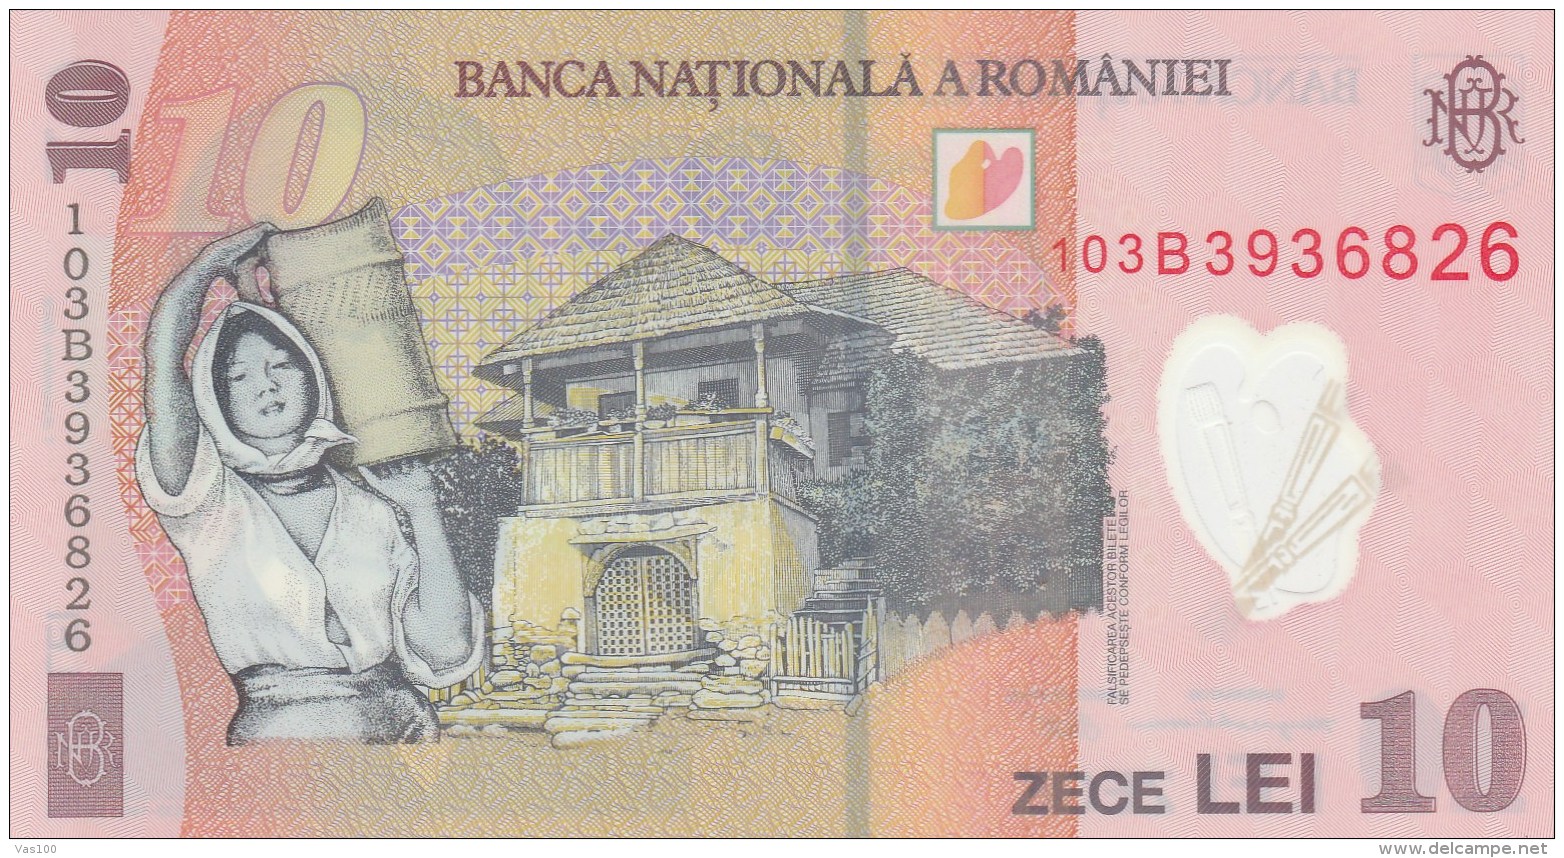 10 LEI X 2, CONSECUTIVE SERIES, 2008, PLASTIC BANKNOTE, ROMANIA. - Roumanie